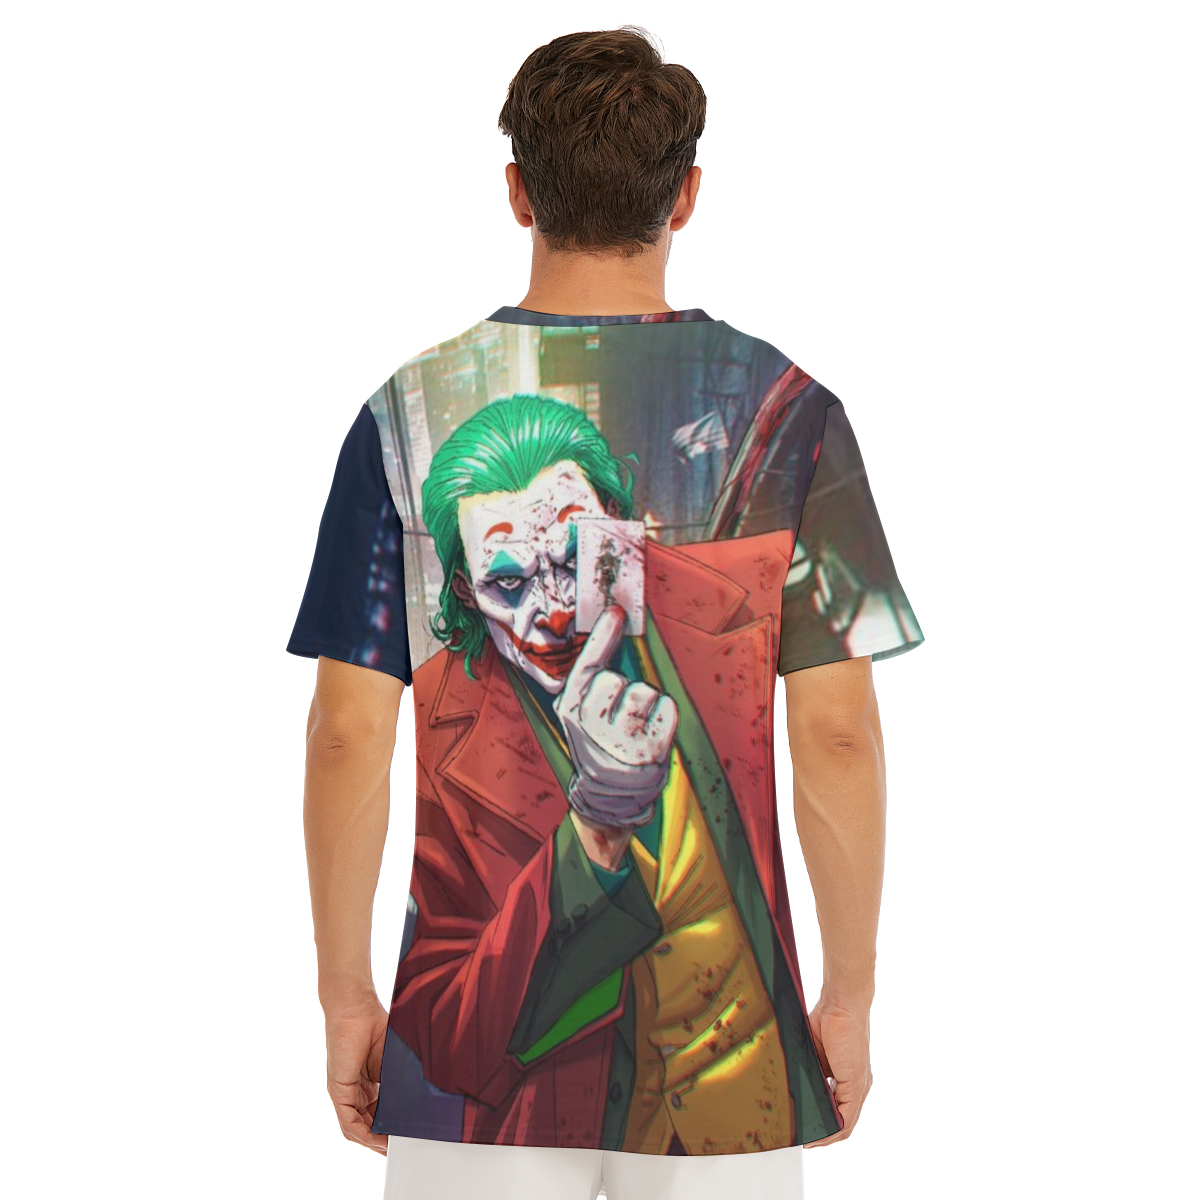 Joker Playing Card T-shirt